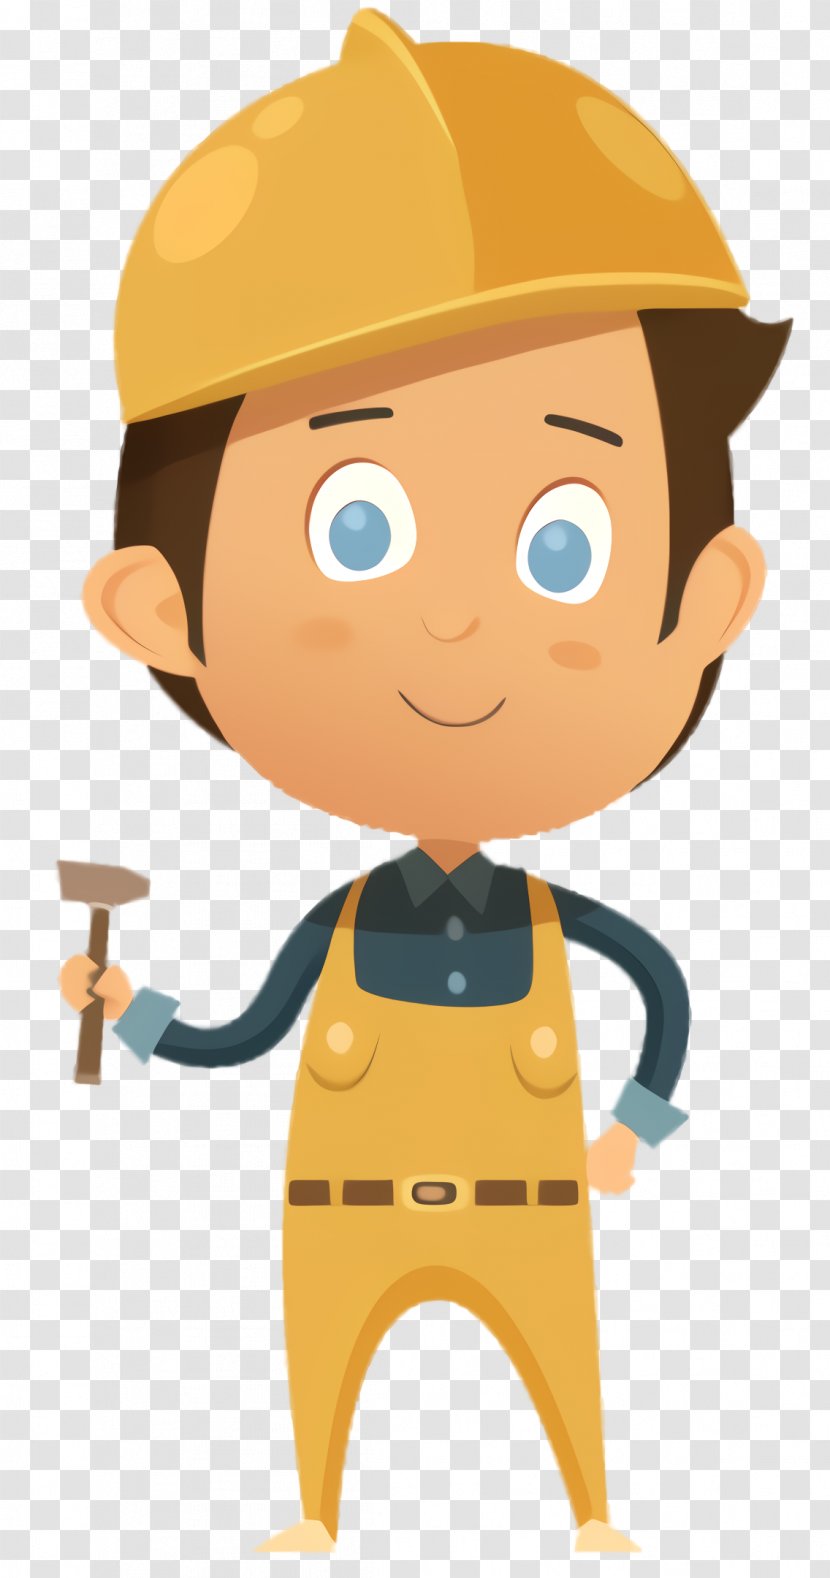 Boy Cartoon - Toy Construction Worker Transparent PNG